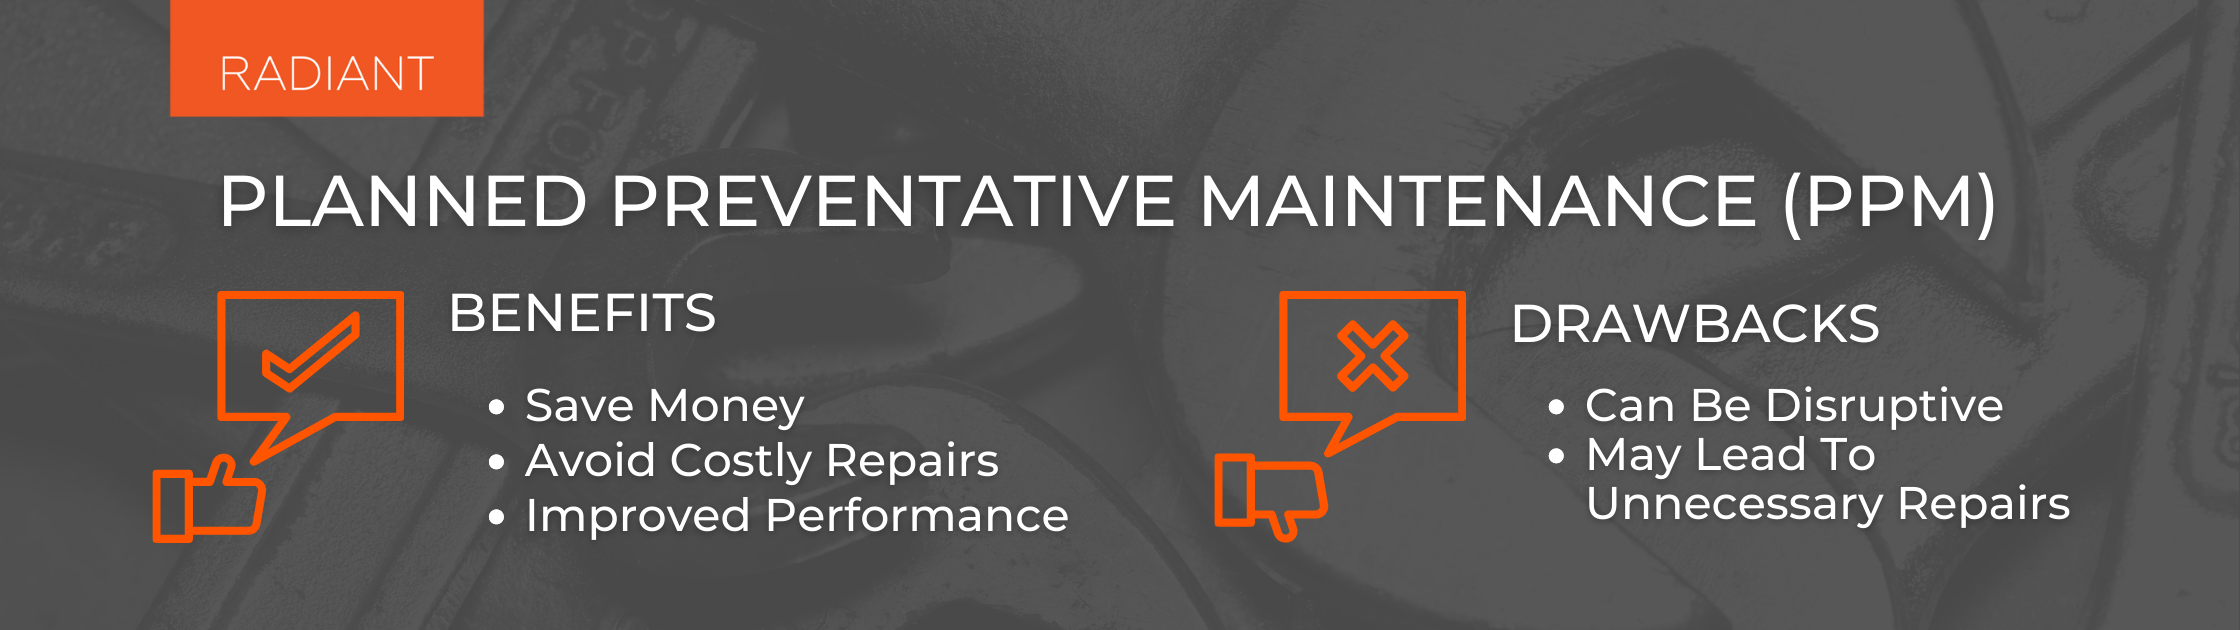 Preventative Maintenance - Asset Maintenance - Types of Asset Maintenance - Asset Maintenance Strategy - Asset Maintenance Strategies - Types Of Maintenance Strategies - Asset Maintenance Plan - Asset Maintenance Program